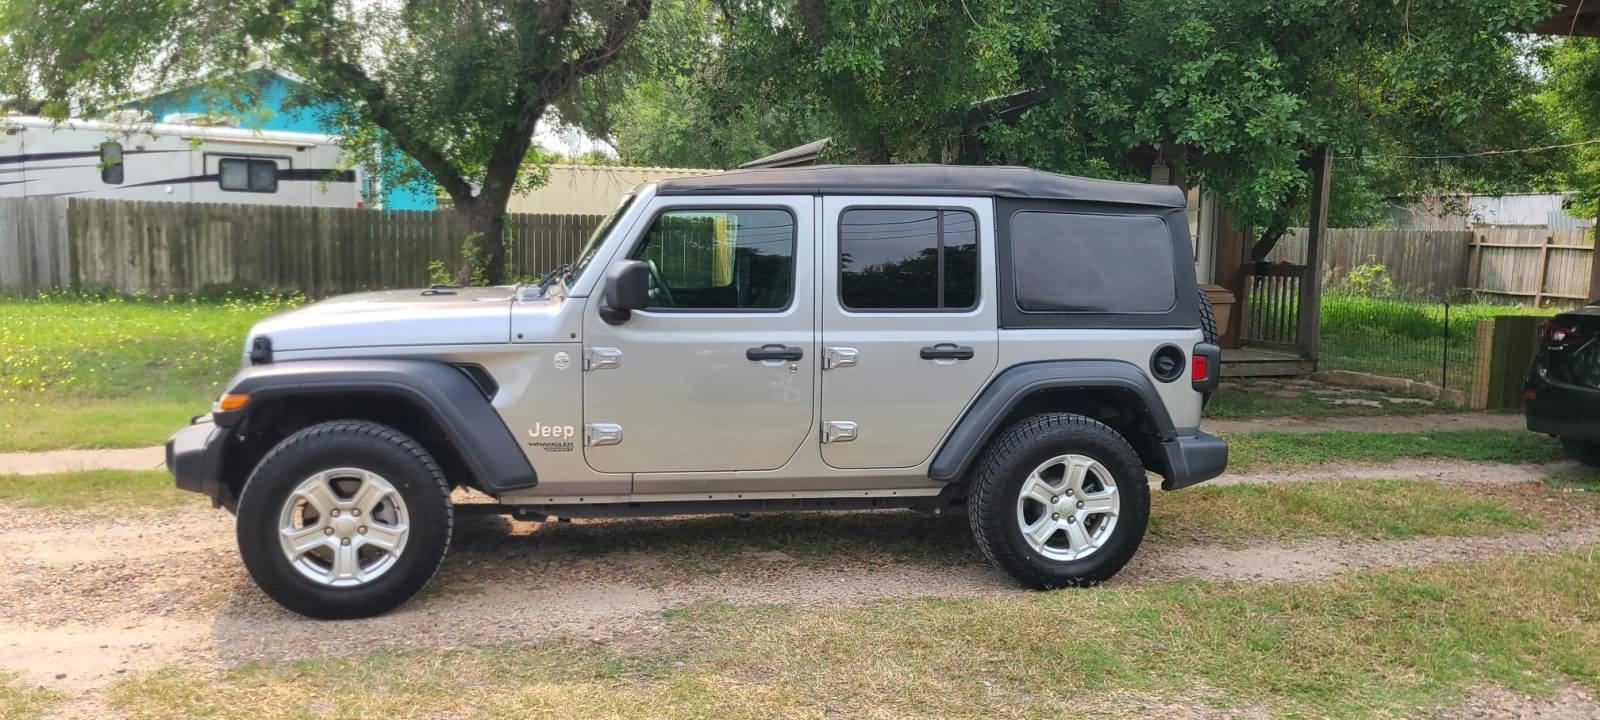 1000002760-wifes-new-jeep.jpg